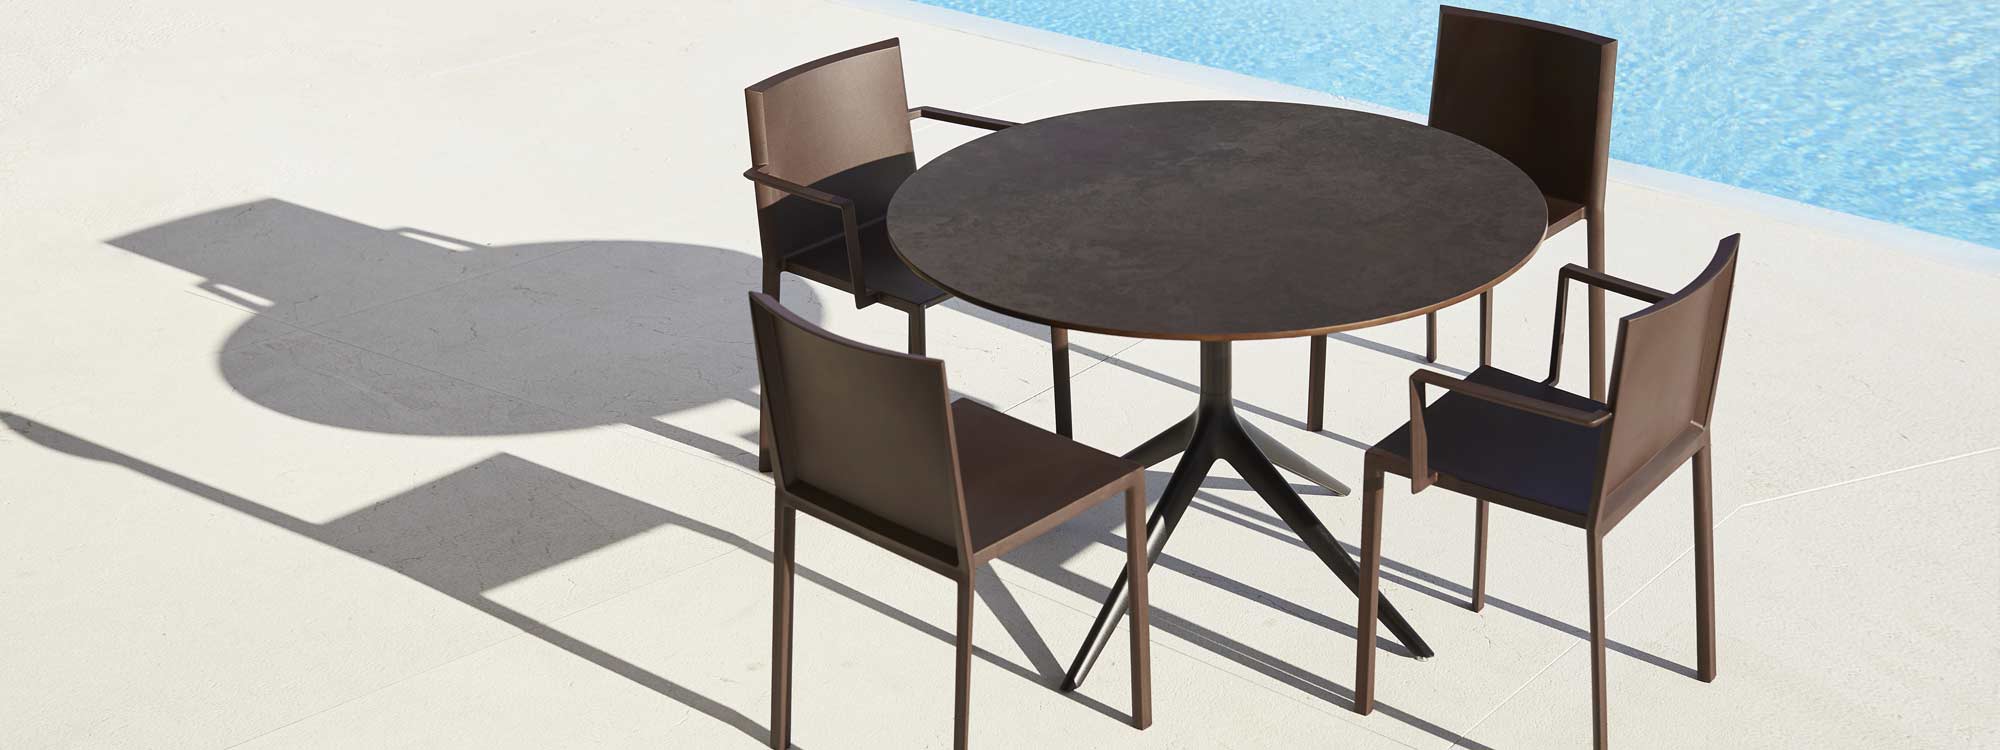 Image of Quartz brown garden chairs around Vondom circular table on sunny poolside